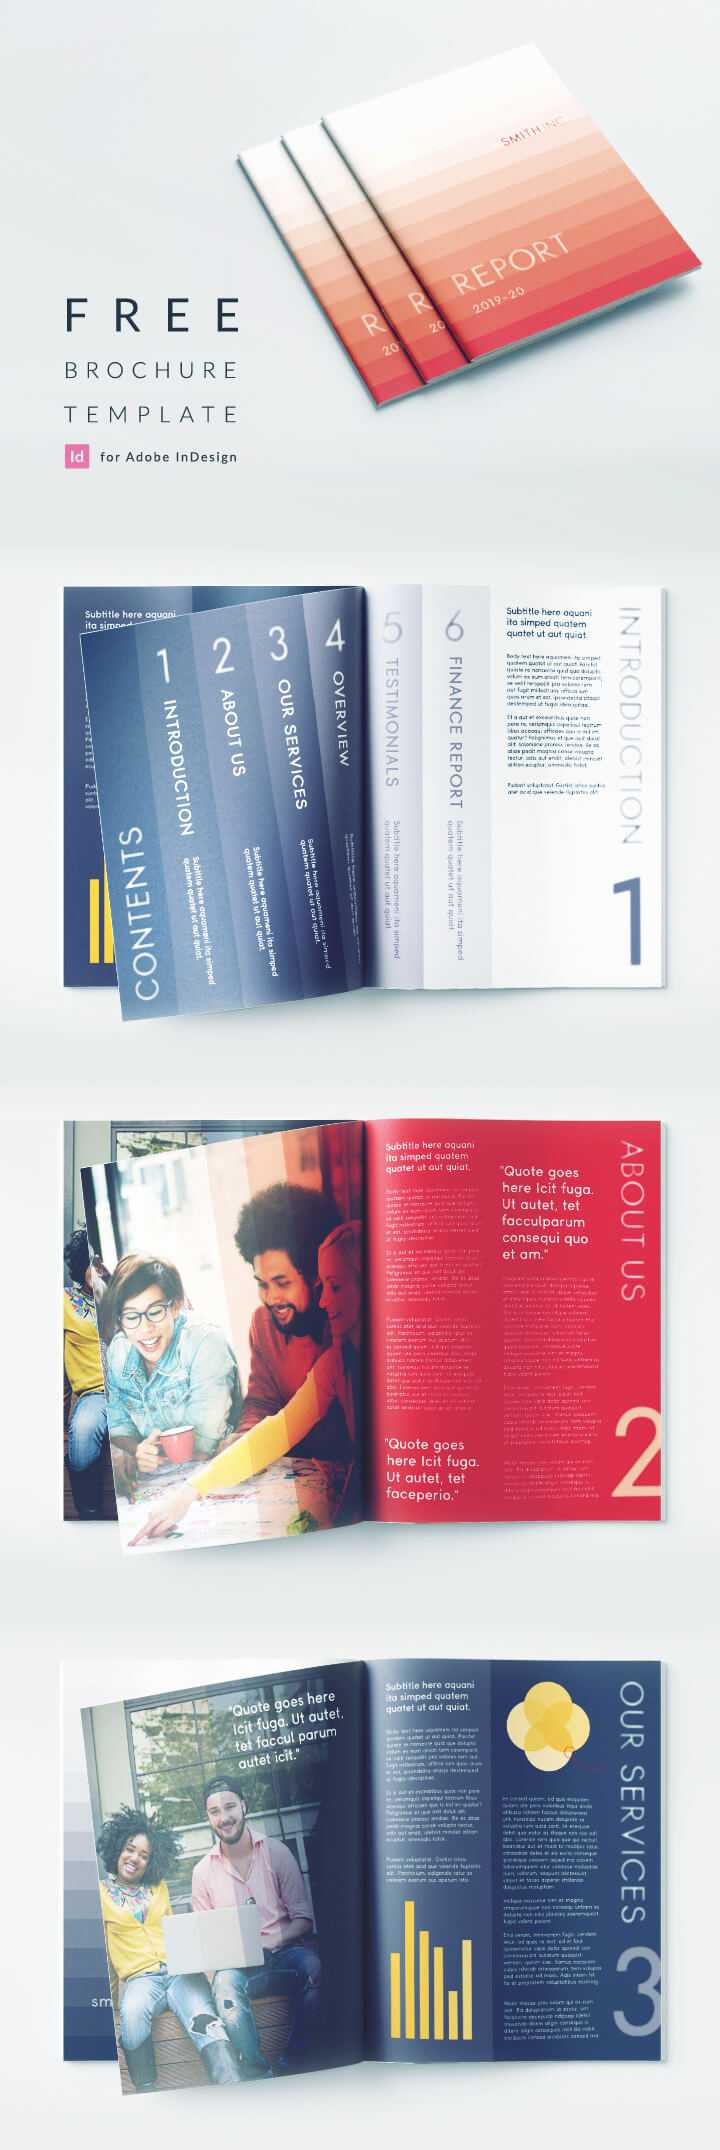 Elegant Corporate Brochure Or Report Indesign Template For Brochure Template Indesign Free Download